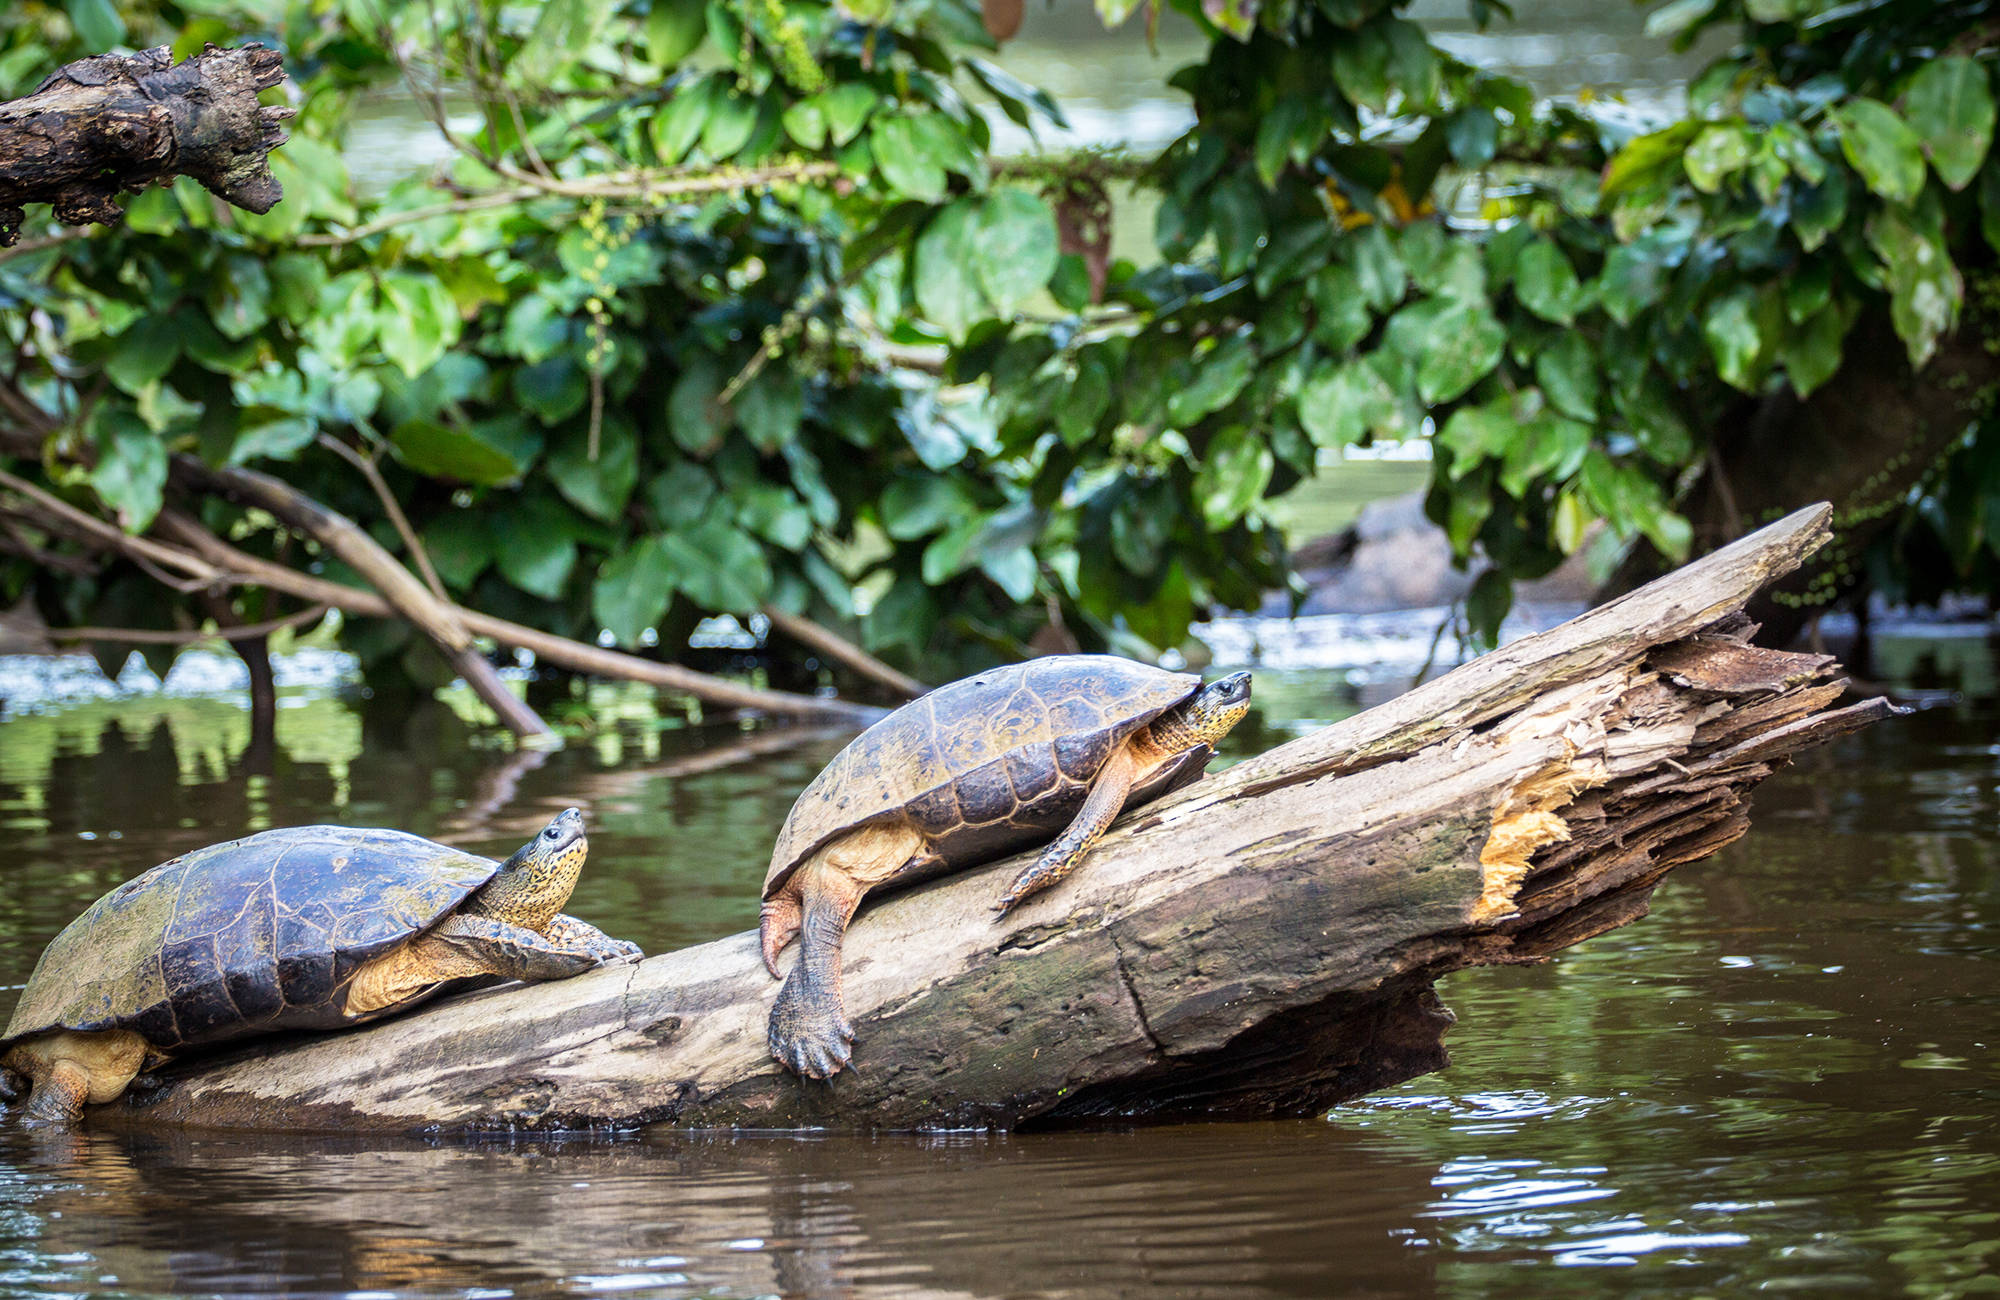 turtles-on-a-log-tortuguero-costa-rica